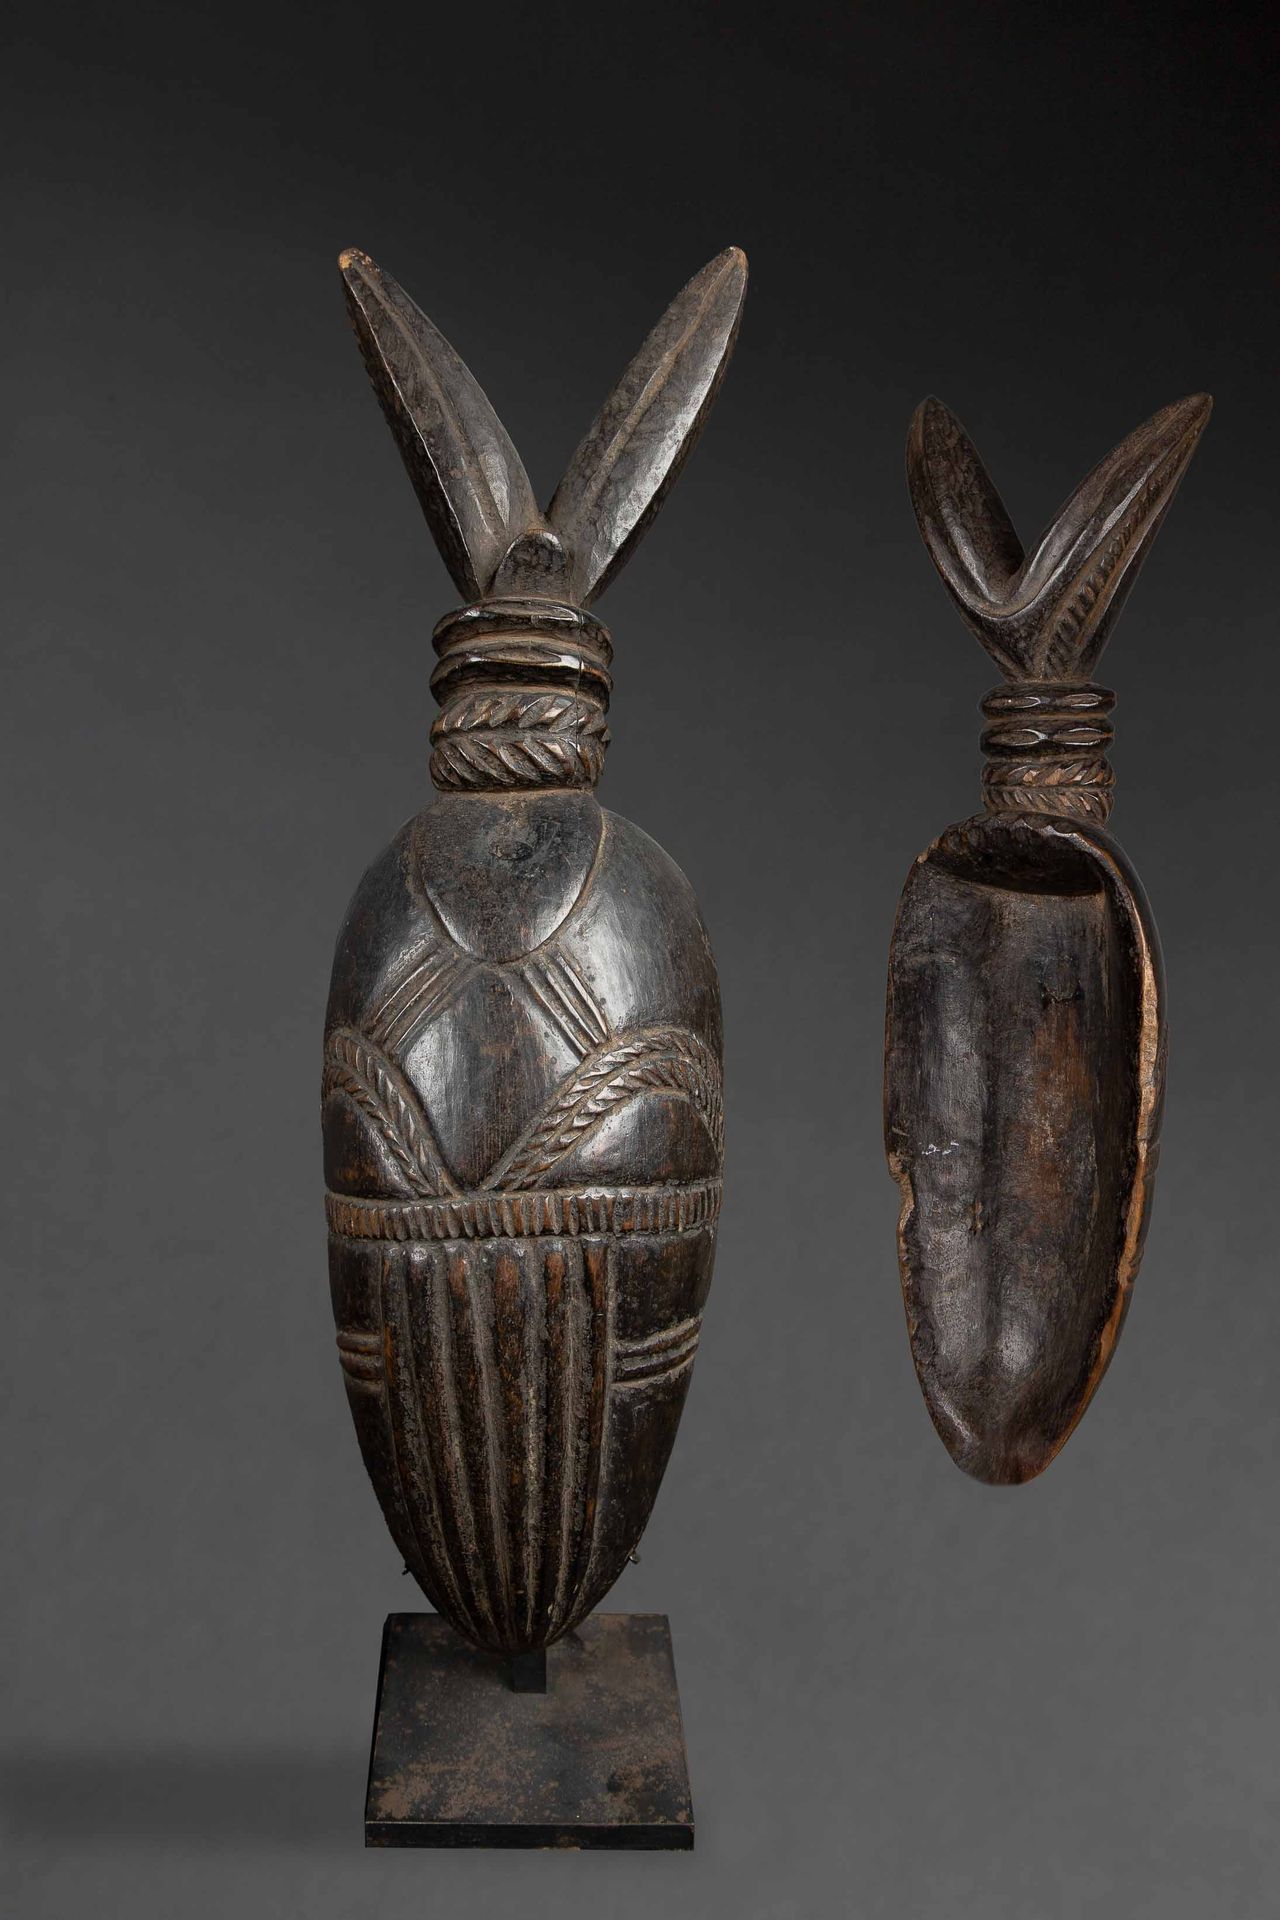 Null 木制祭祀用勺子，有古老的棕色锈迹和使用痕迹，有雕刻的手柄。丹，象牙海岸共和国，20世纪上半叶。高度：40厘米